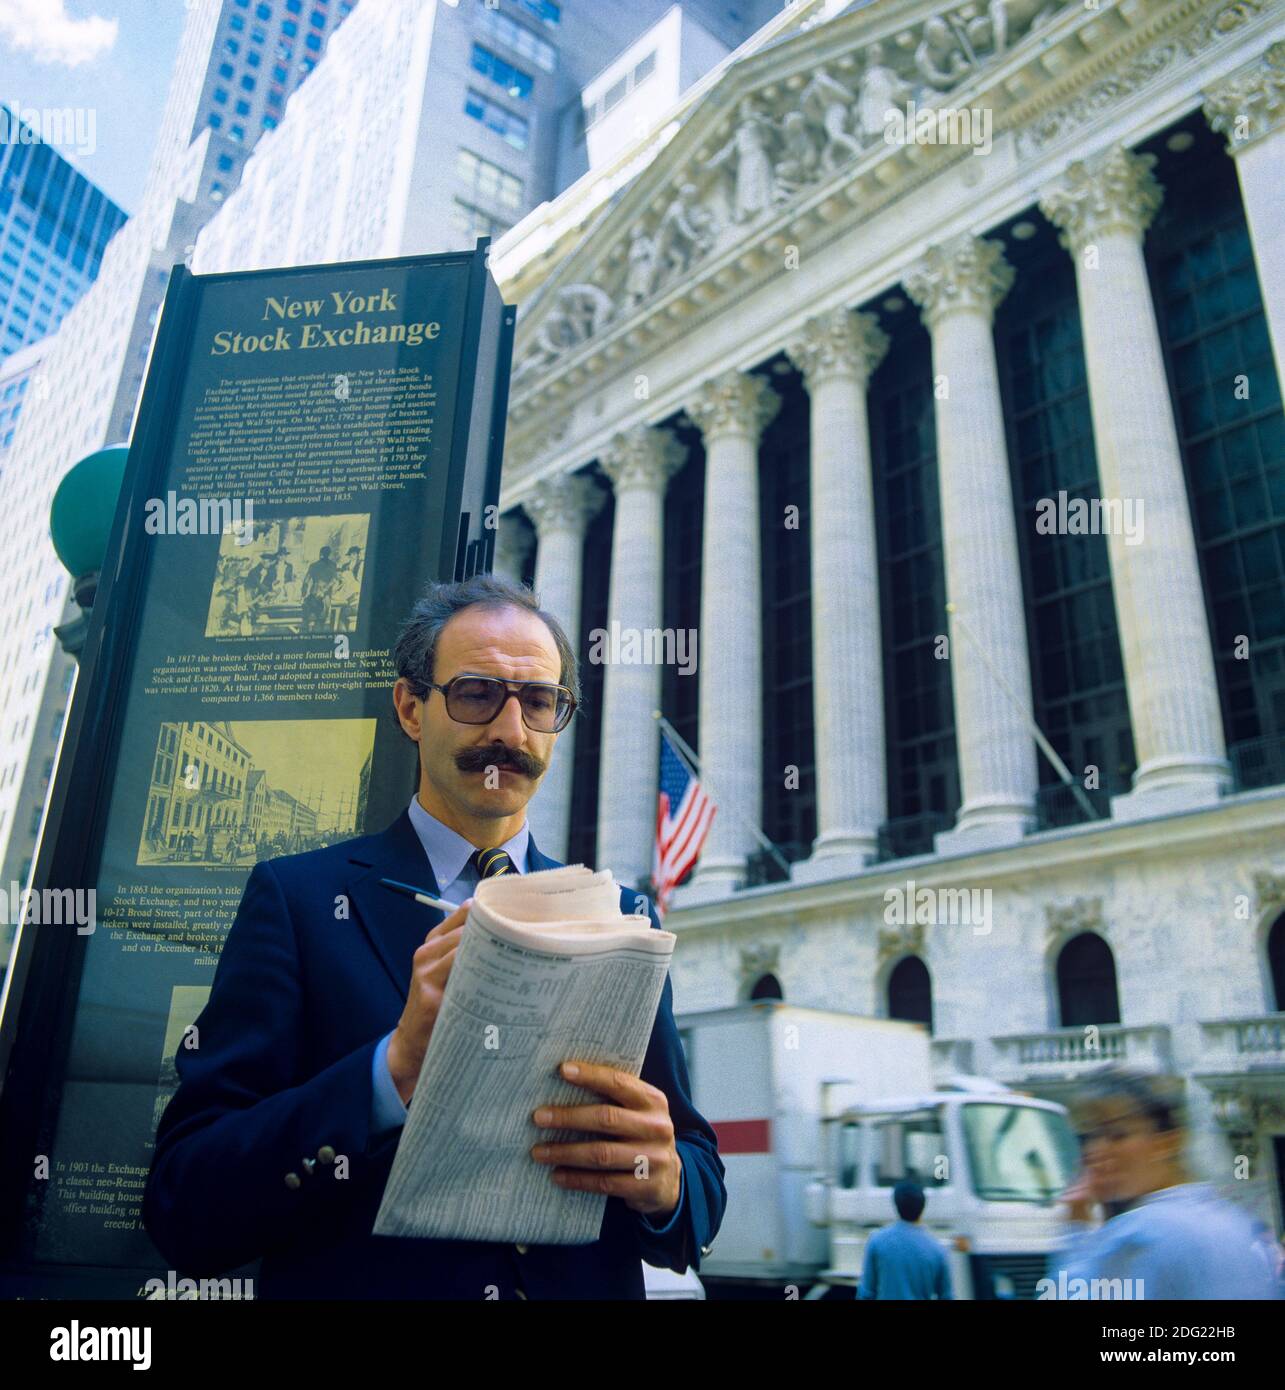 New York 1985, homme vérifiant les prix des actions dans le Wall Street Journal, NYSE stock Exchange façade de bâtiment, Broad Street, Manhattan, New York City, NY, NYC, ETATS-UNIS, Banque D'Images